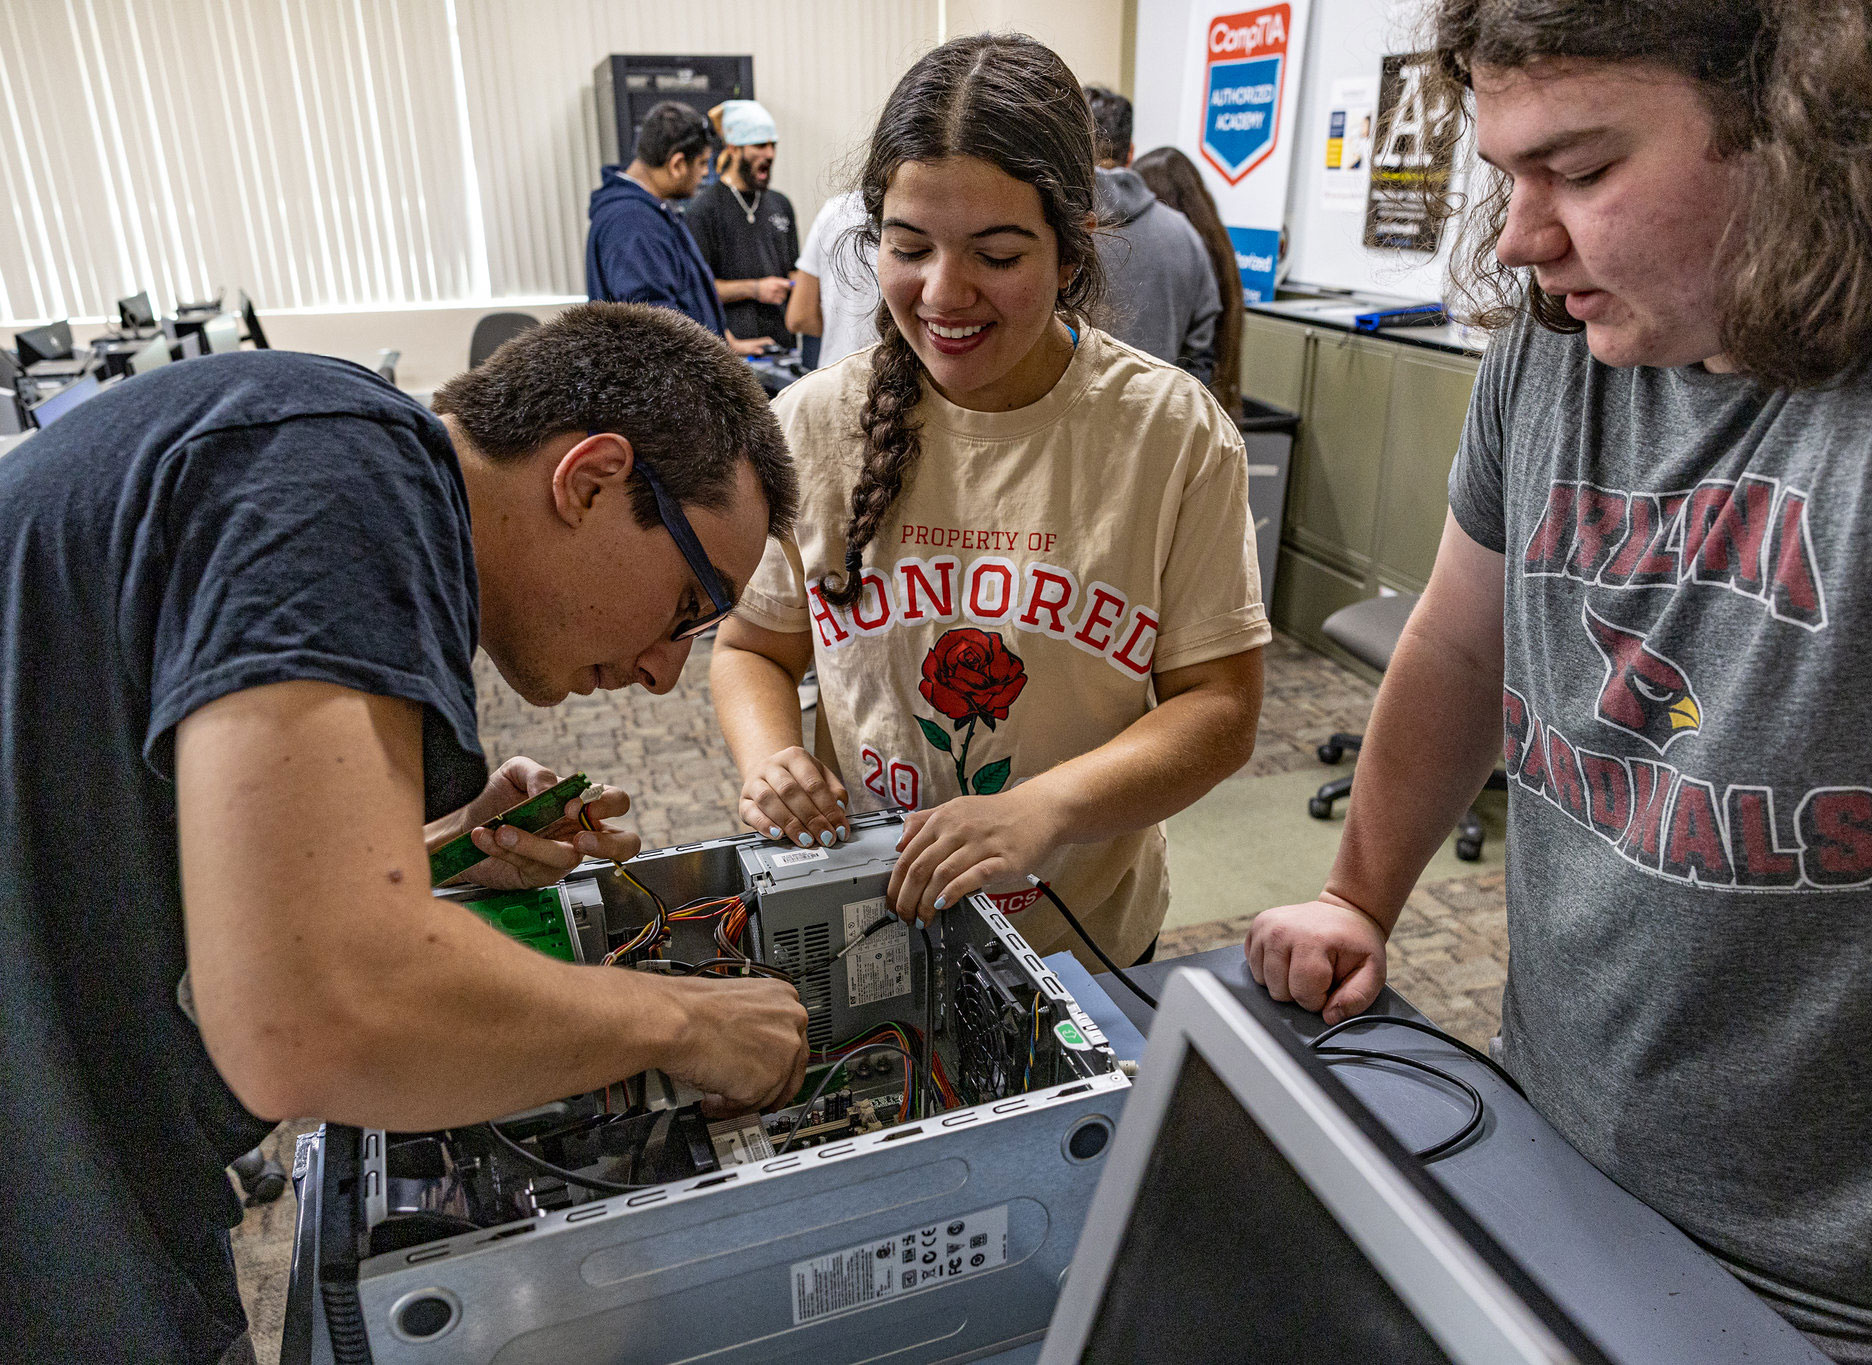 Students rewiring a computer